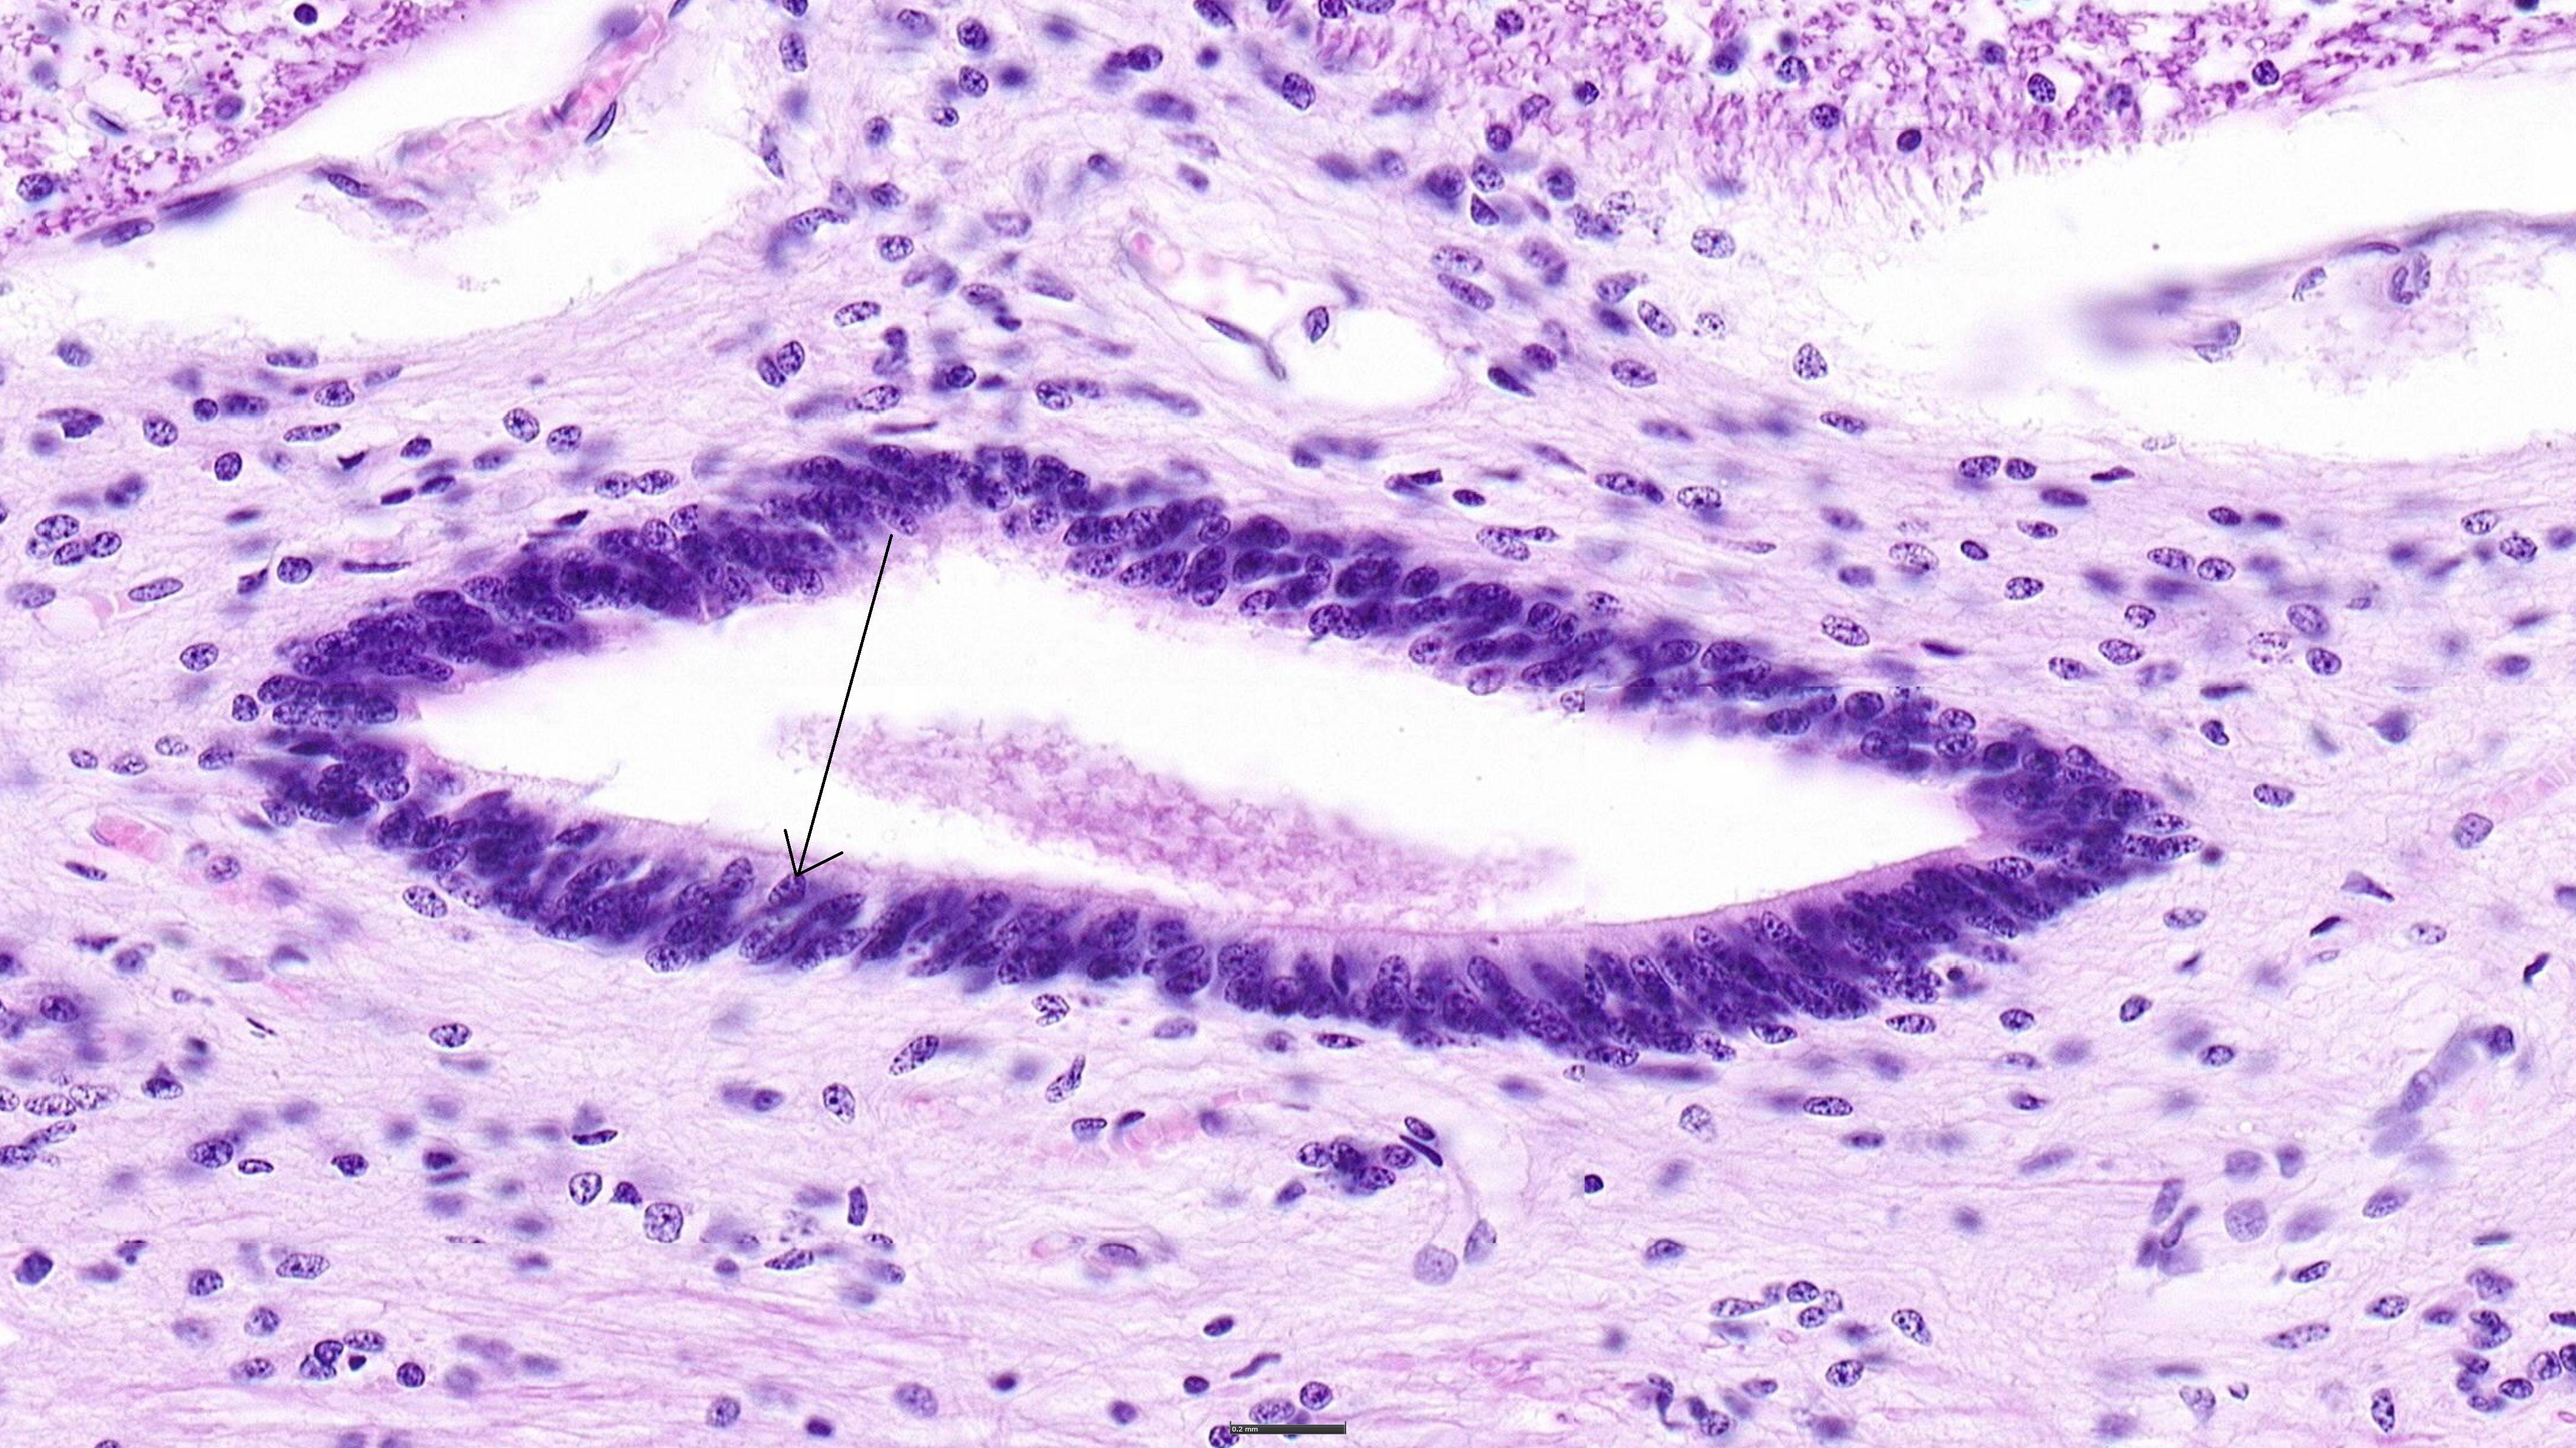 ependymal cells histology